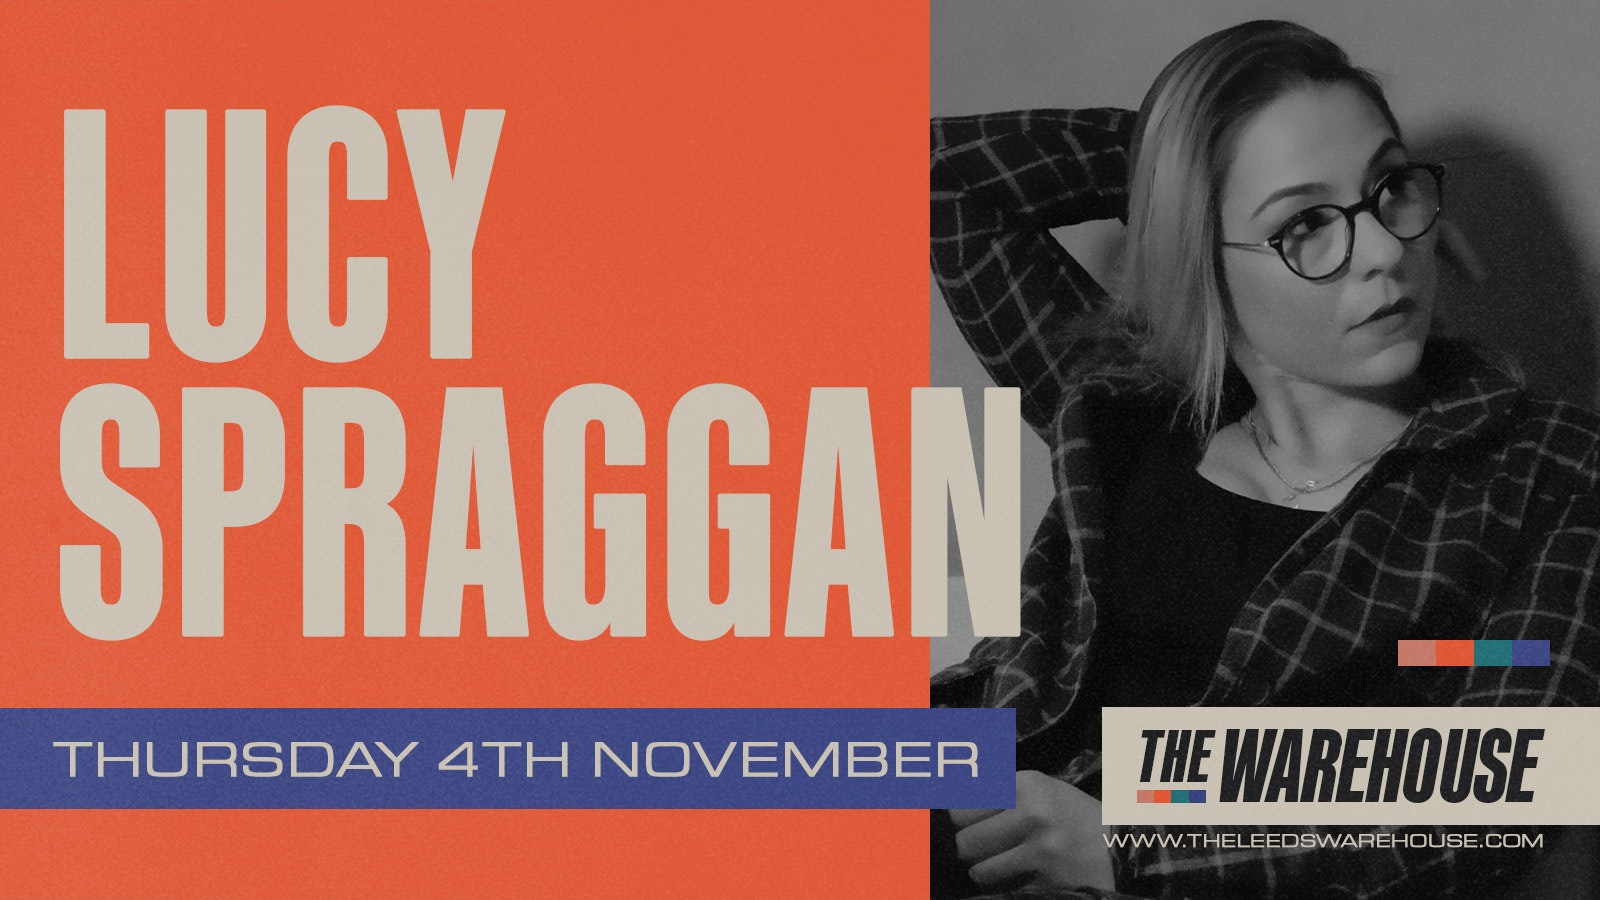 Lucy Spraggan – Live